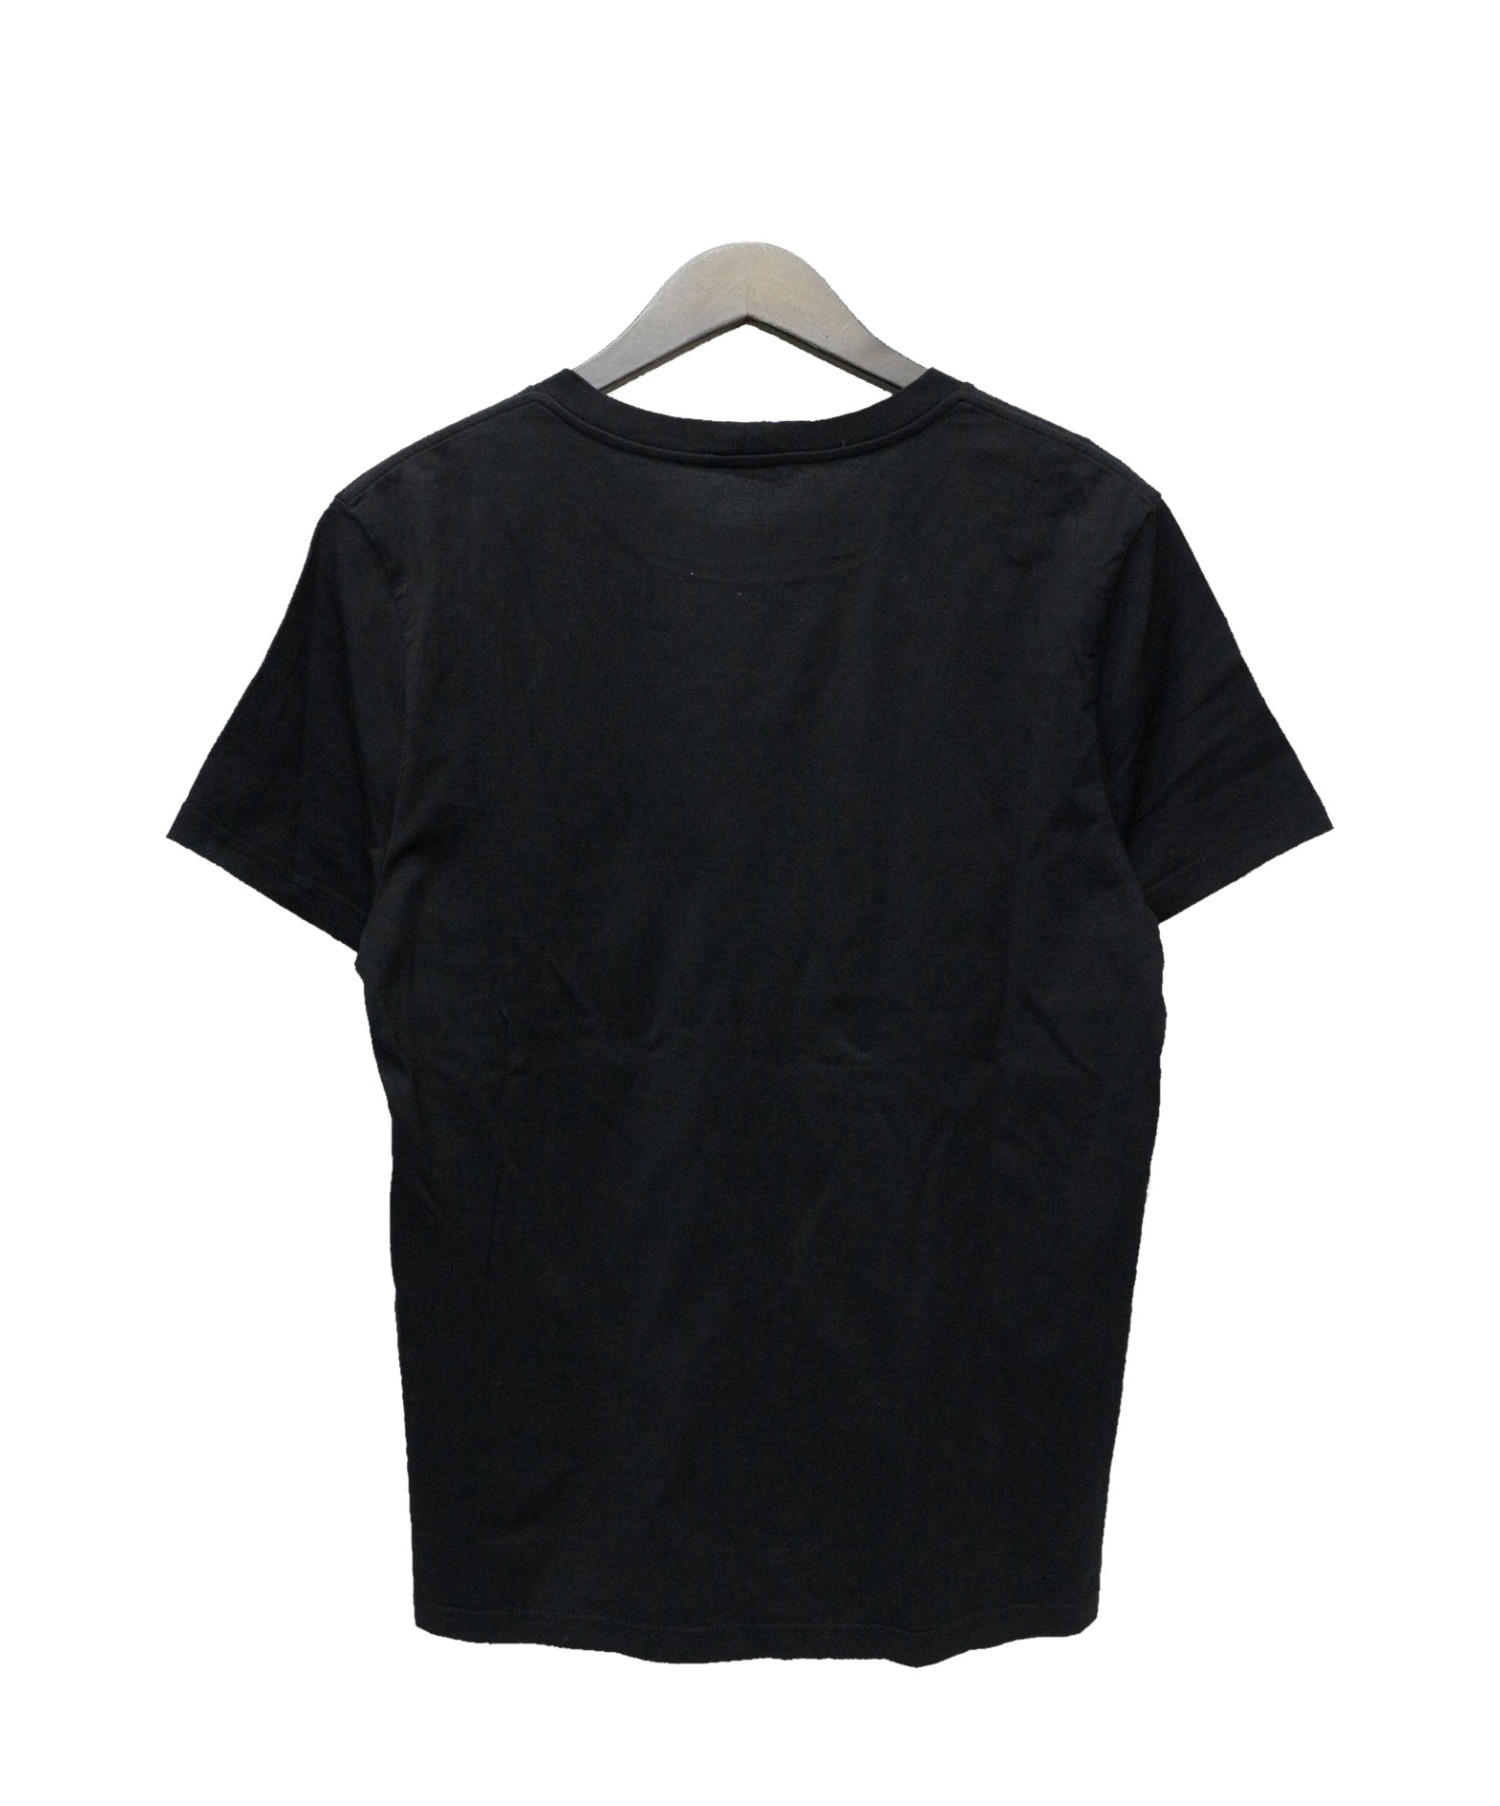 CELINE (セリーヌ) ロゴプリントTシャツ ブラック サイズ:L